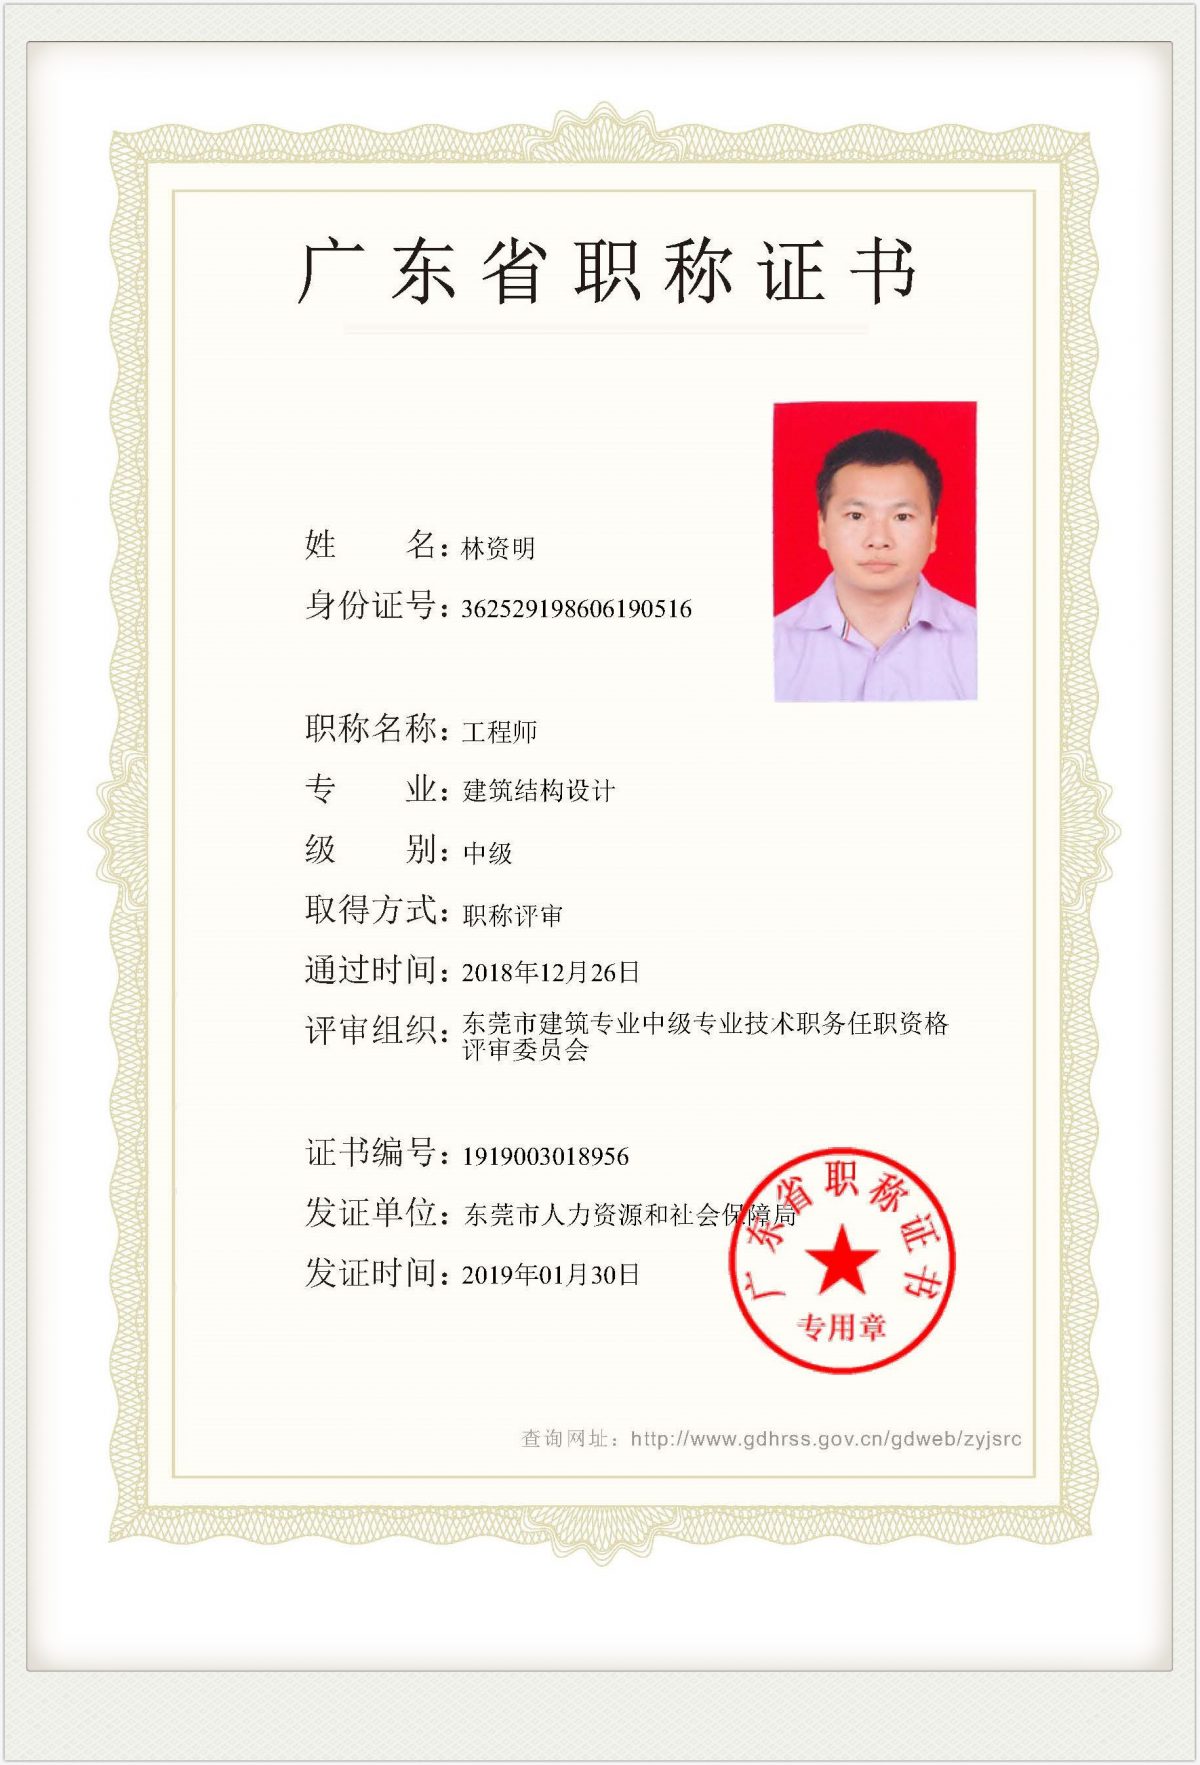 Professional title certificate 1